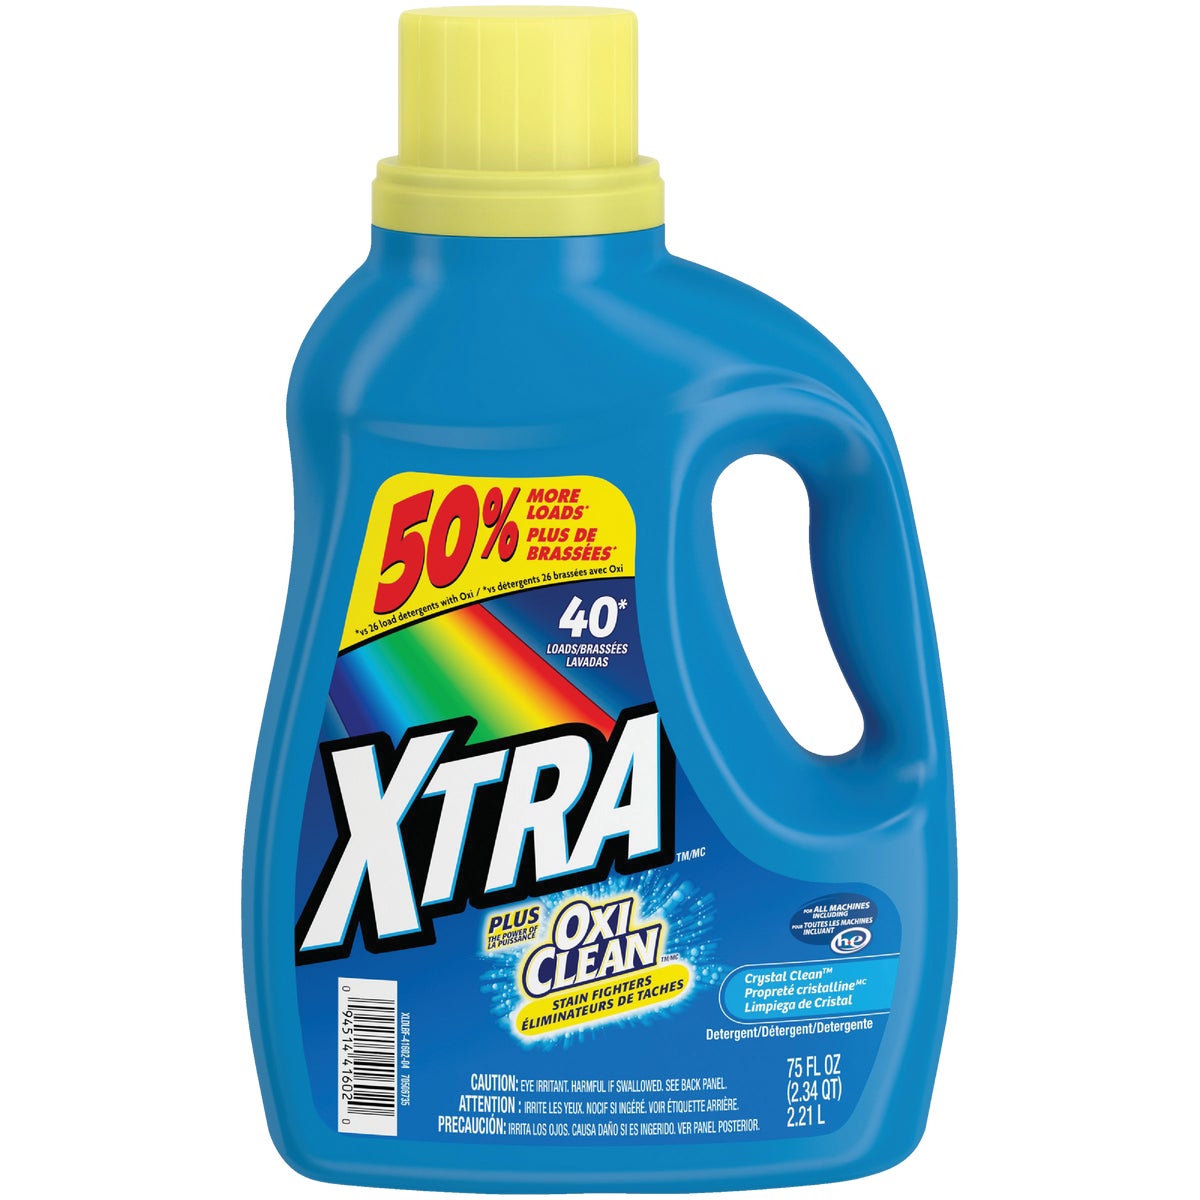 XTRA 56 Oz. Plus Oxi Liquid Laundry Detergent